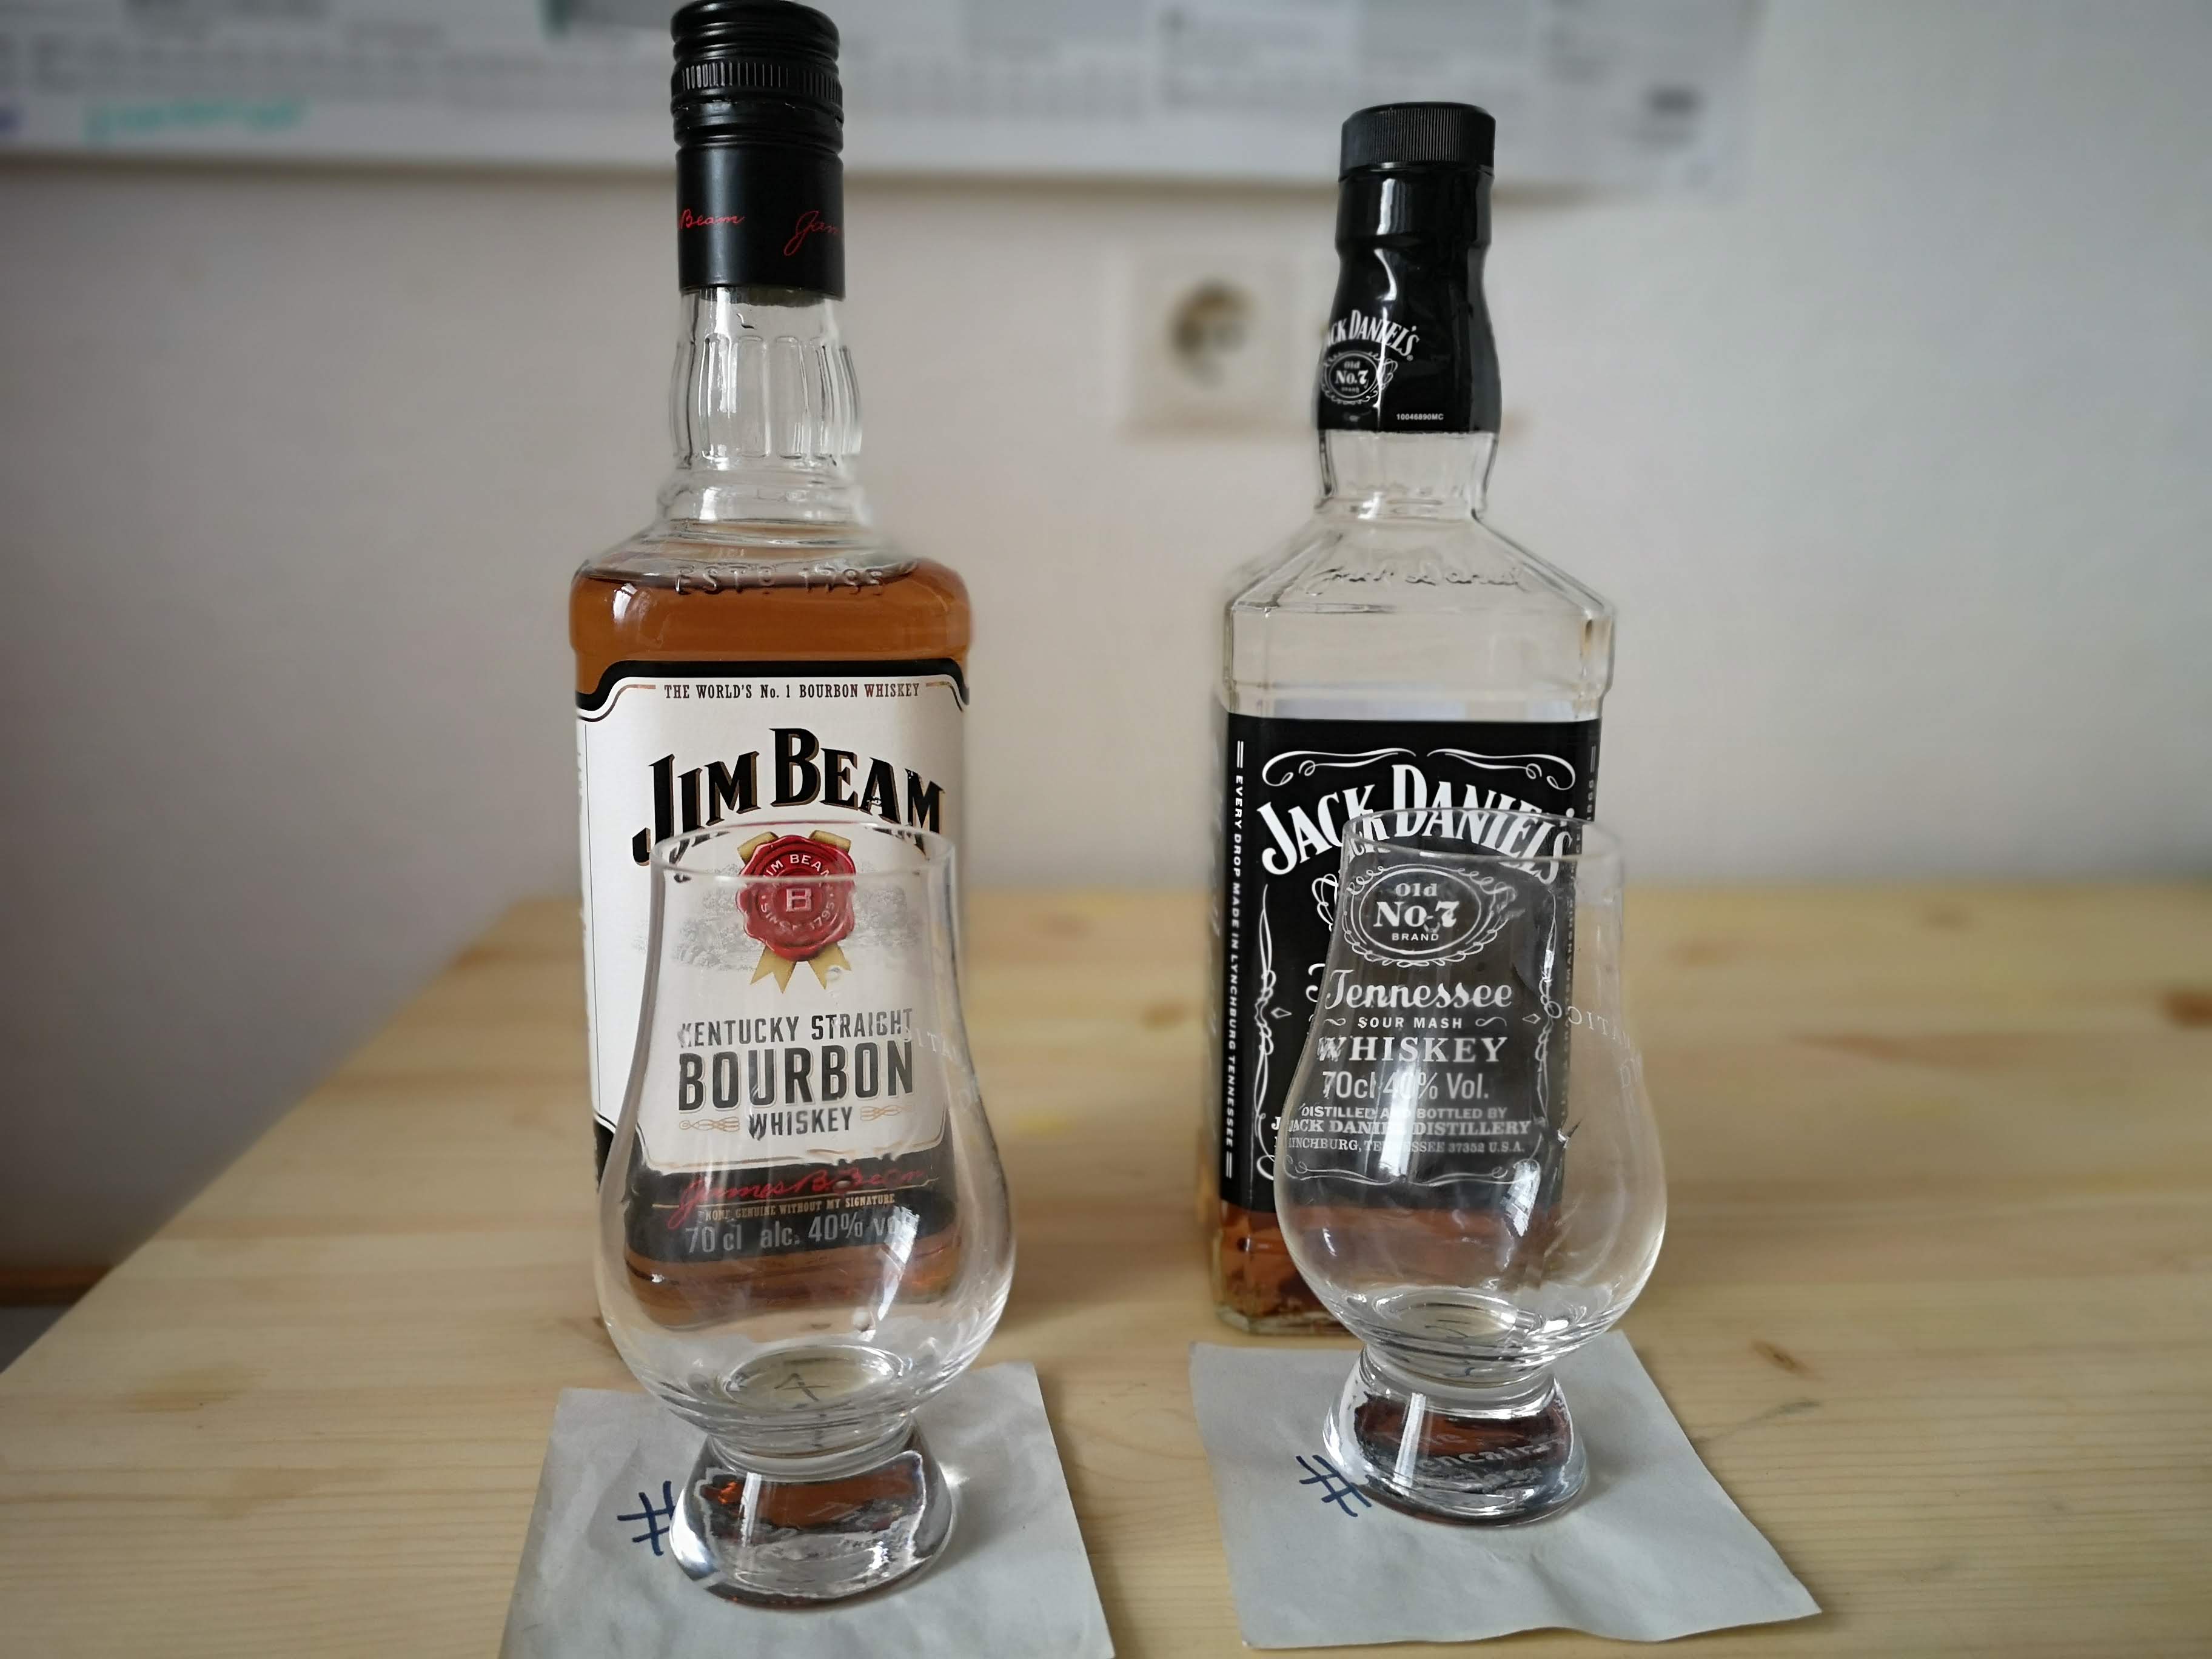 Jim Beam vs. Jack Daniel's